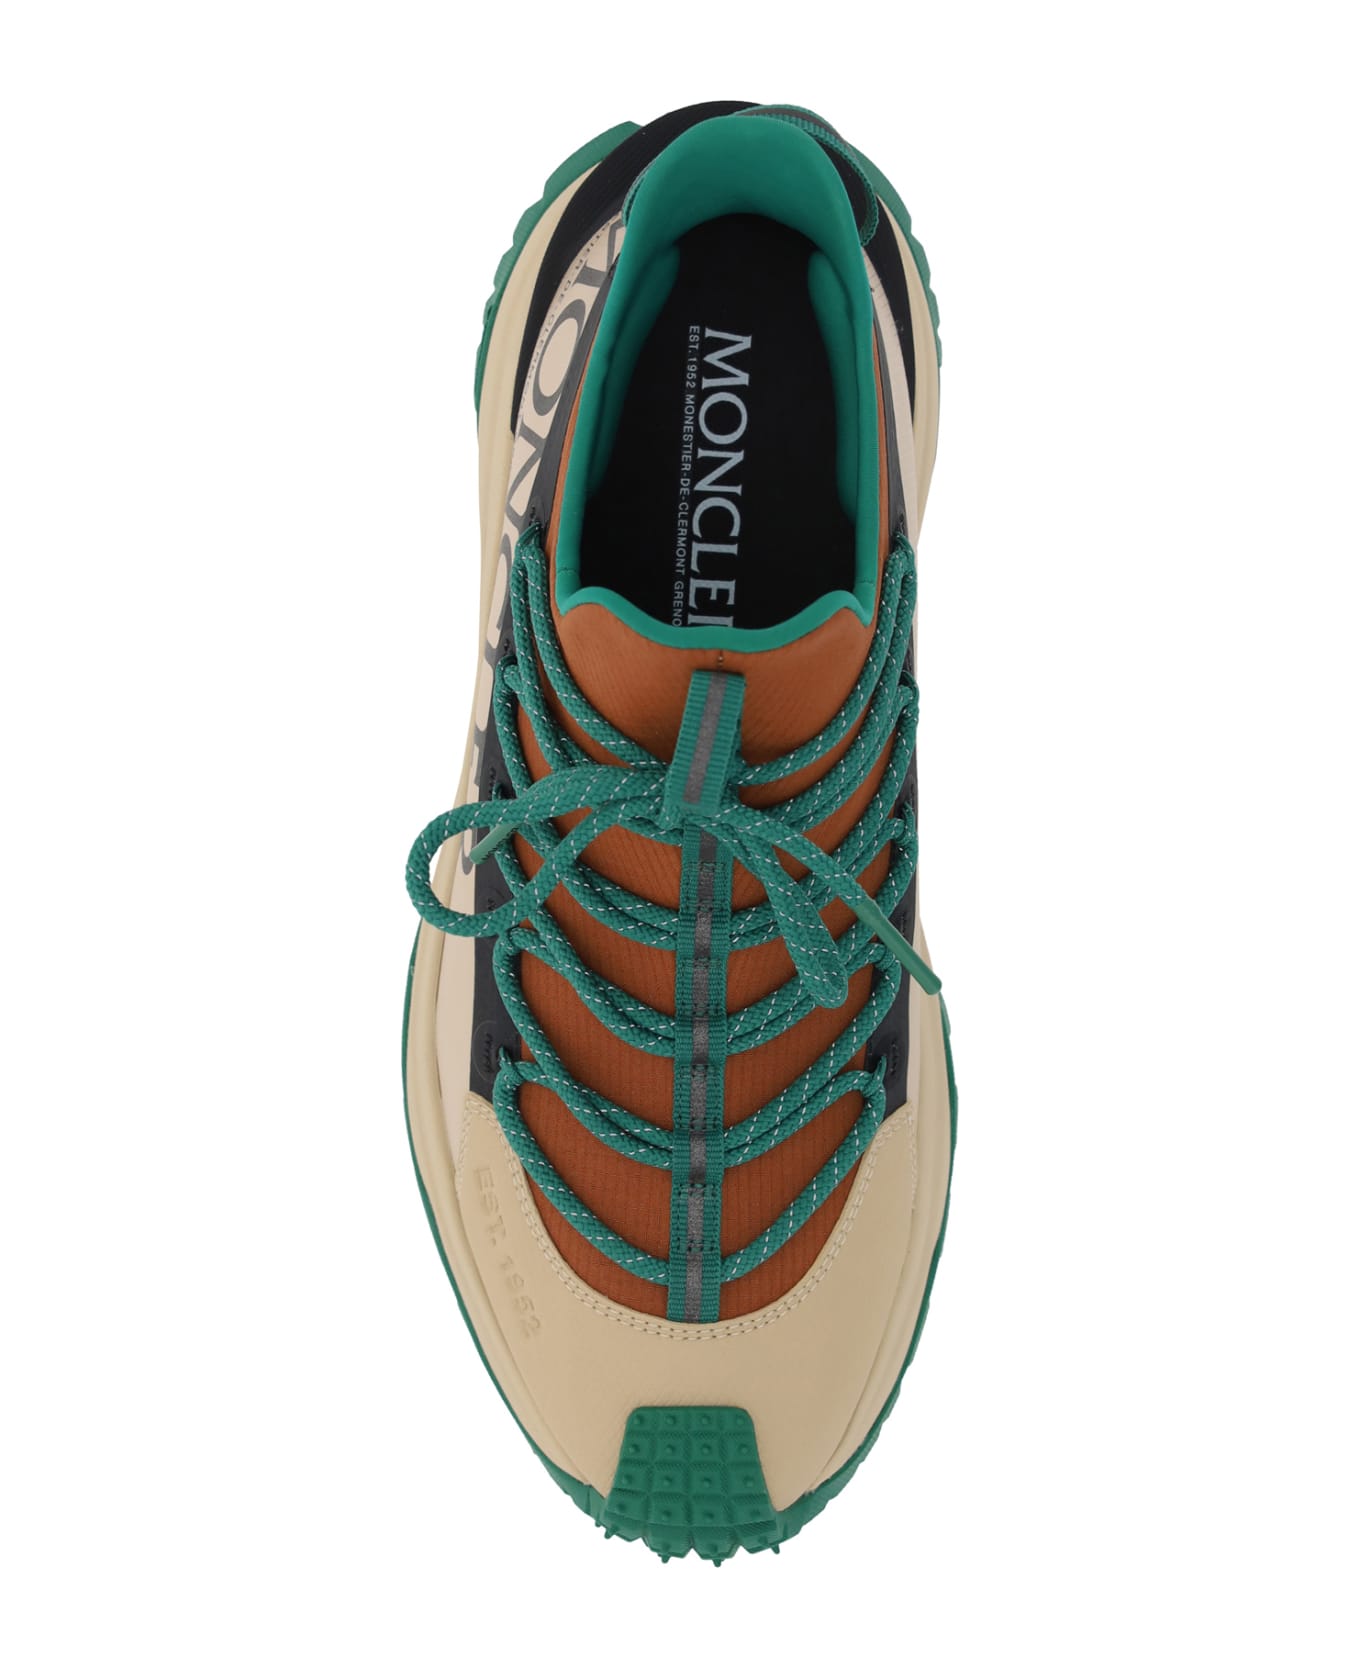 Moncler Trailgrip Lite Sneakers - Marrone